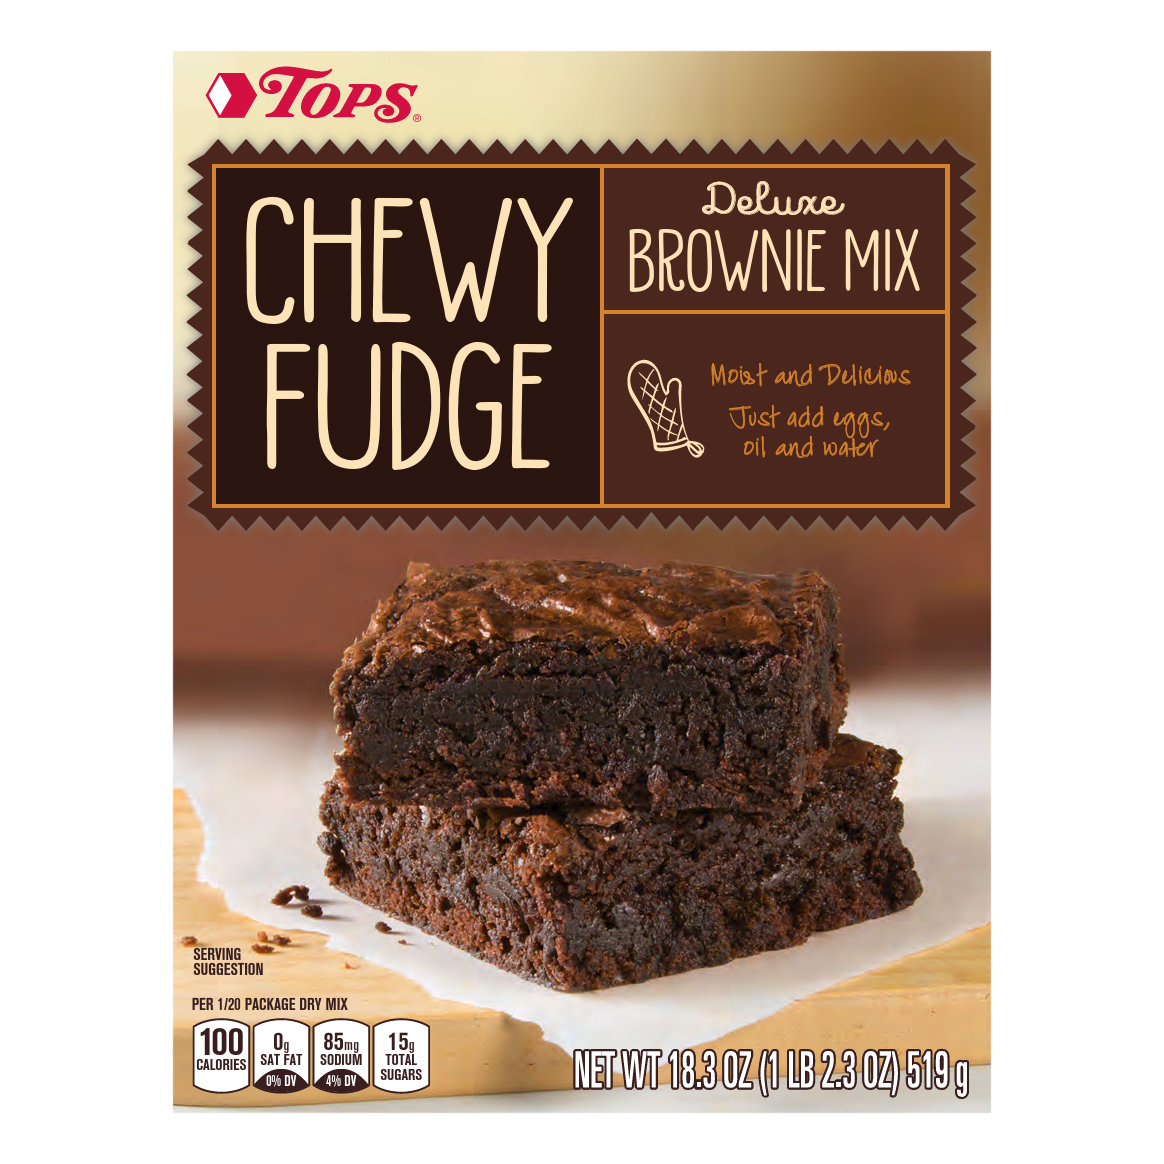 Chewy Fudge Brownie Mix - Baker's Corner